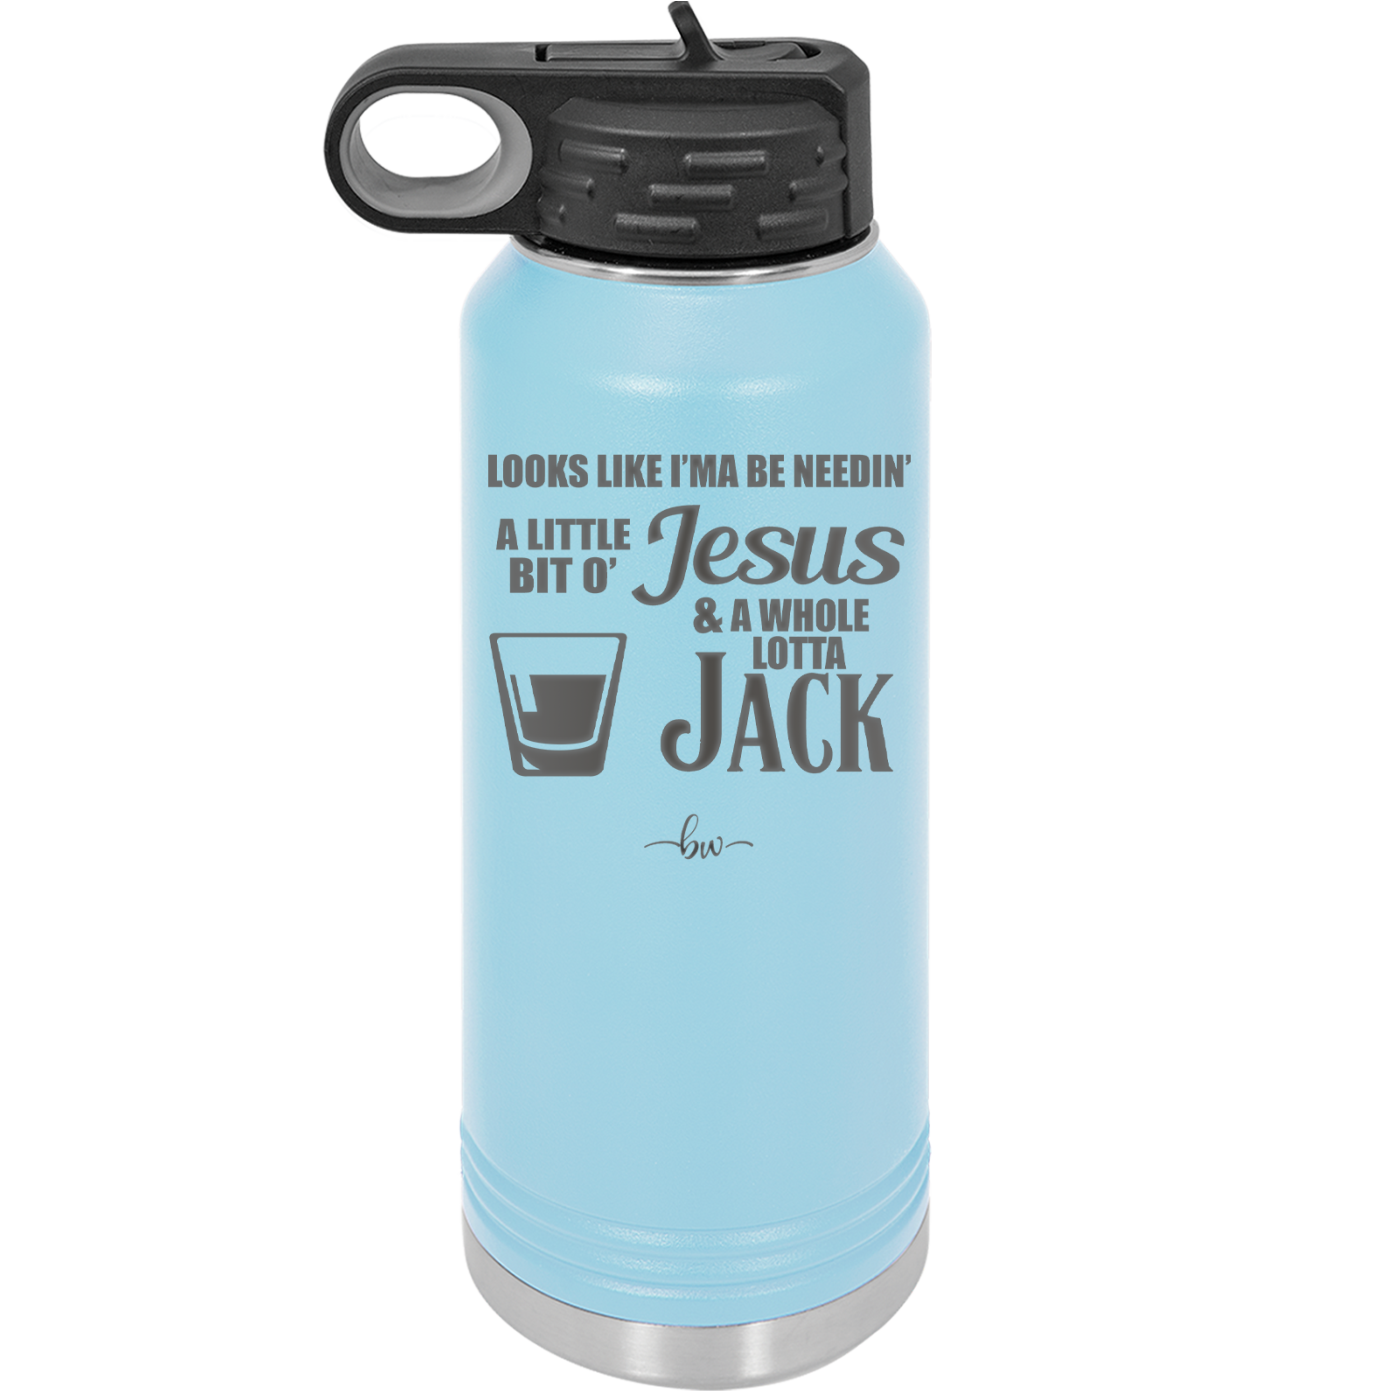 Looks Like I'mma Be Needin' a Little Bit o' Jesus, and a Whole Lotta Jack. - Laser Engraved Stainless Steel Drinkware - 2273 -